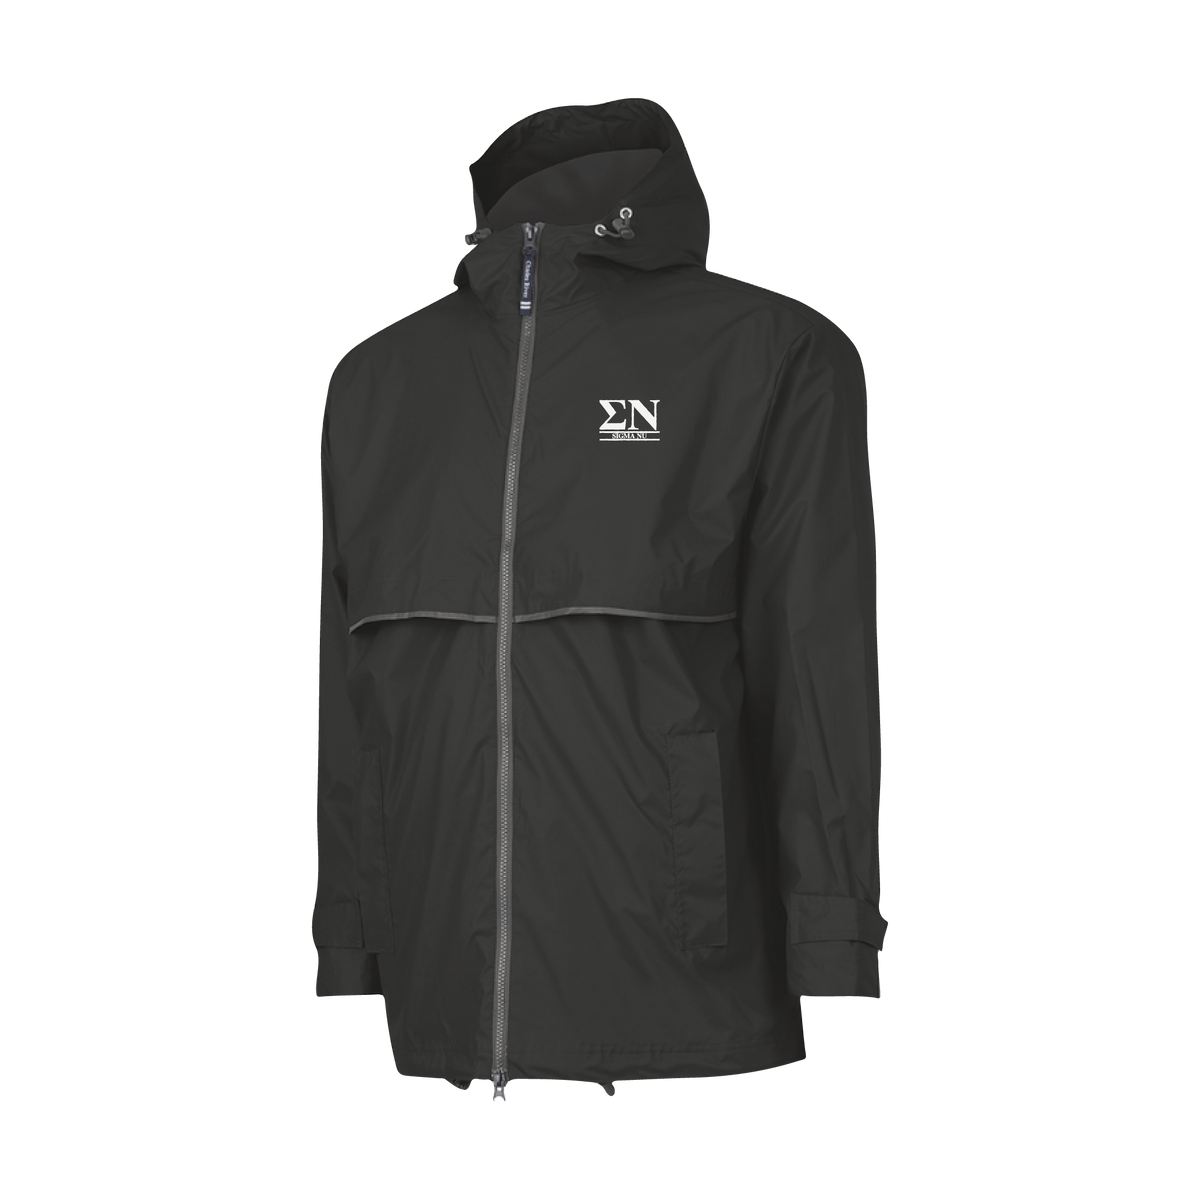 B-Unlimited Greek - Rain Jacket (SIGMA NU) - Charles River - 9199 - New Englander Rain Jacket - Black